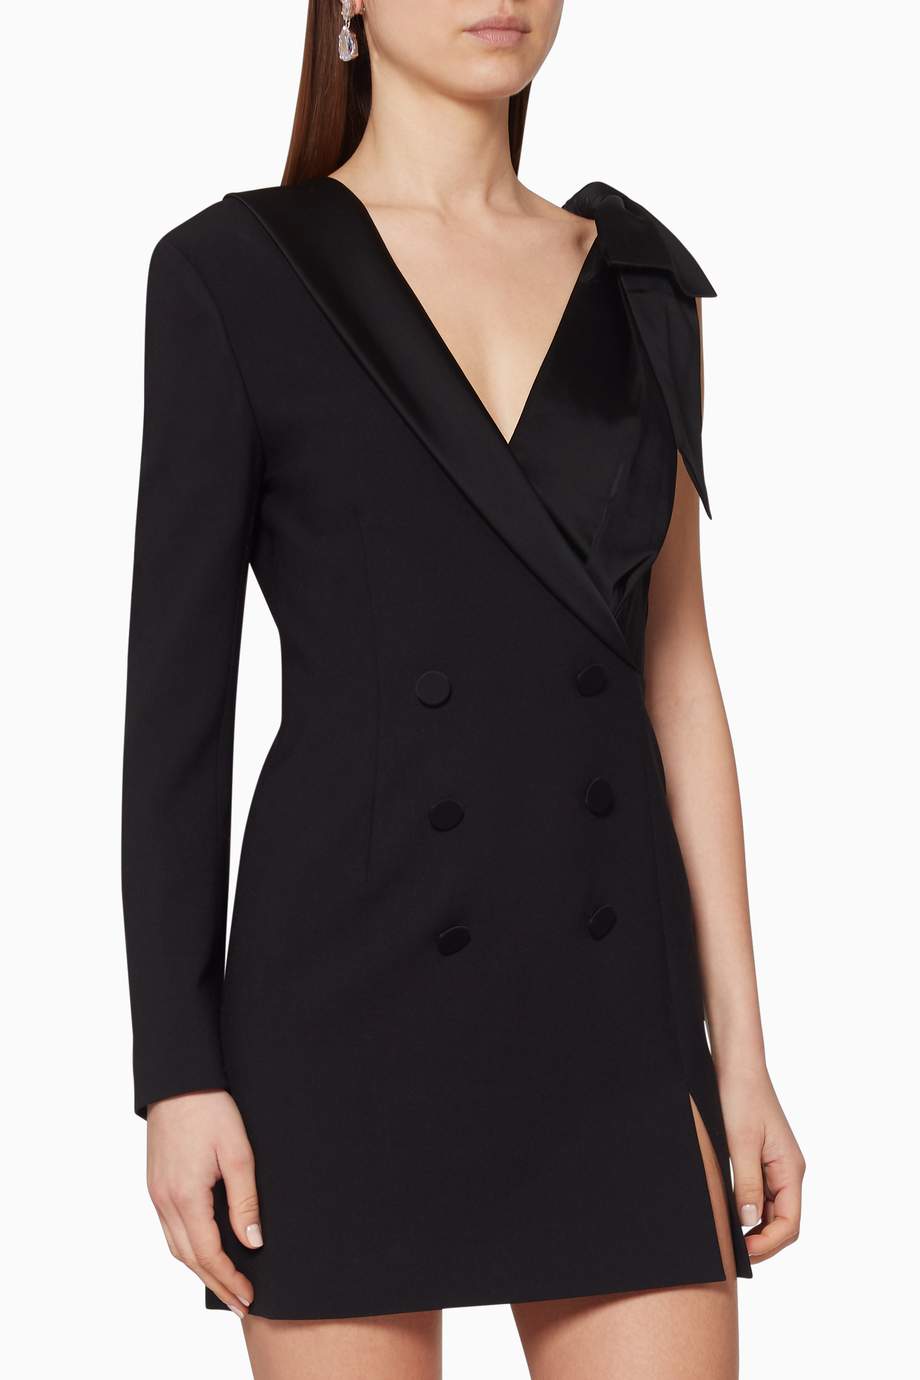 Shop Jonathan Simkhai Black Asymmetric Double-Breasted Blazer Dress for ...